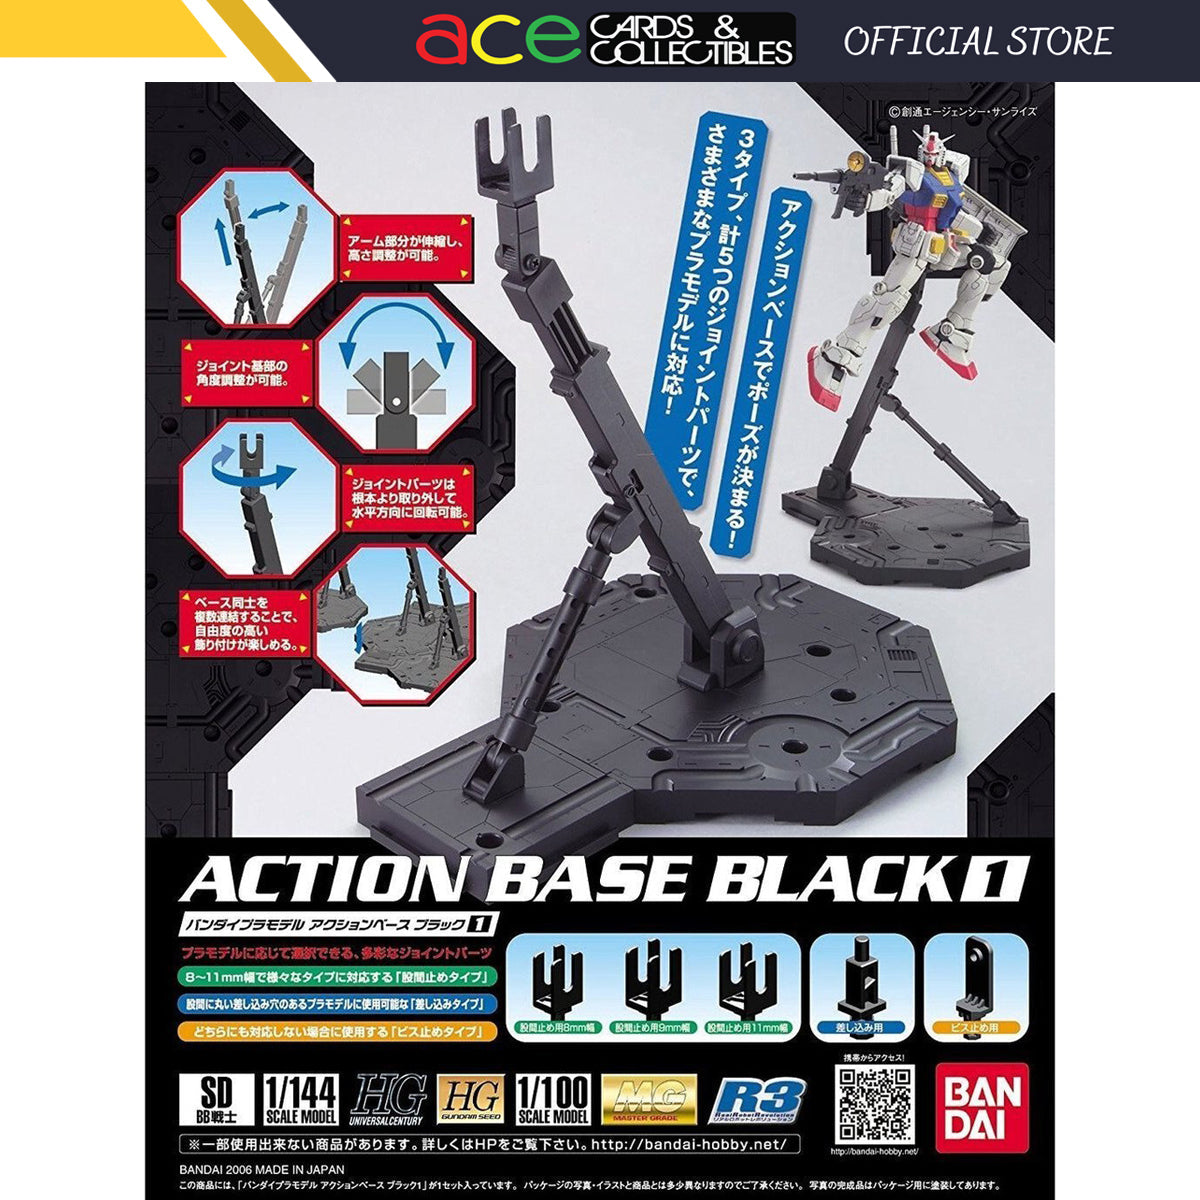 Gunpla 1/100 Action Base Black Ace Cards  Collectibles